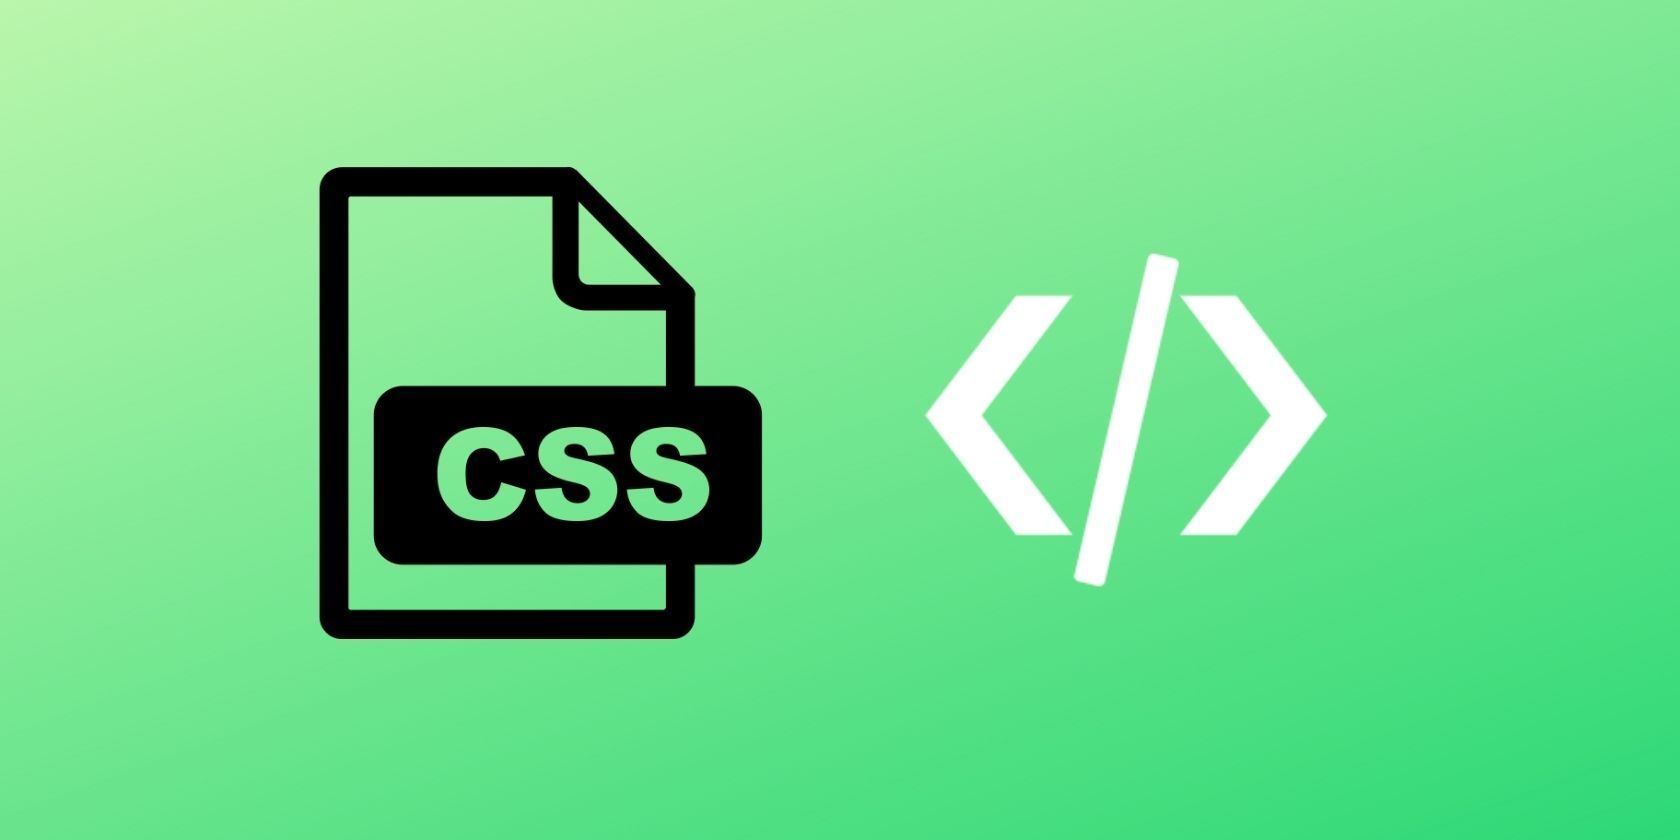 A CSS logo alongside an HTML logo